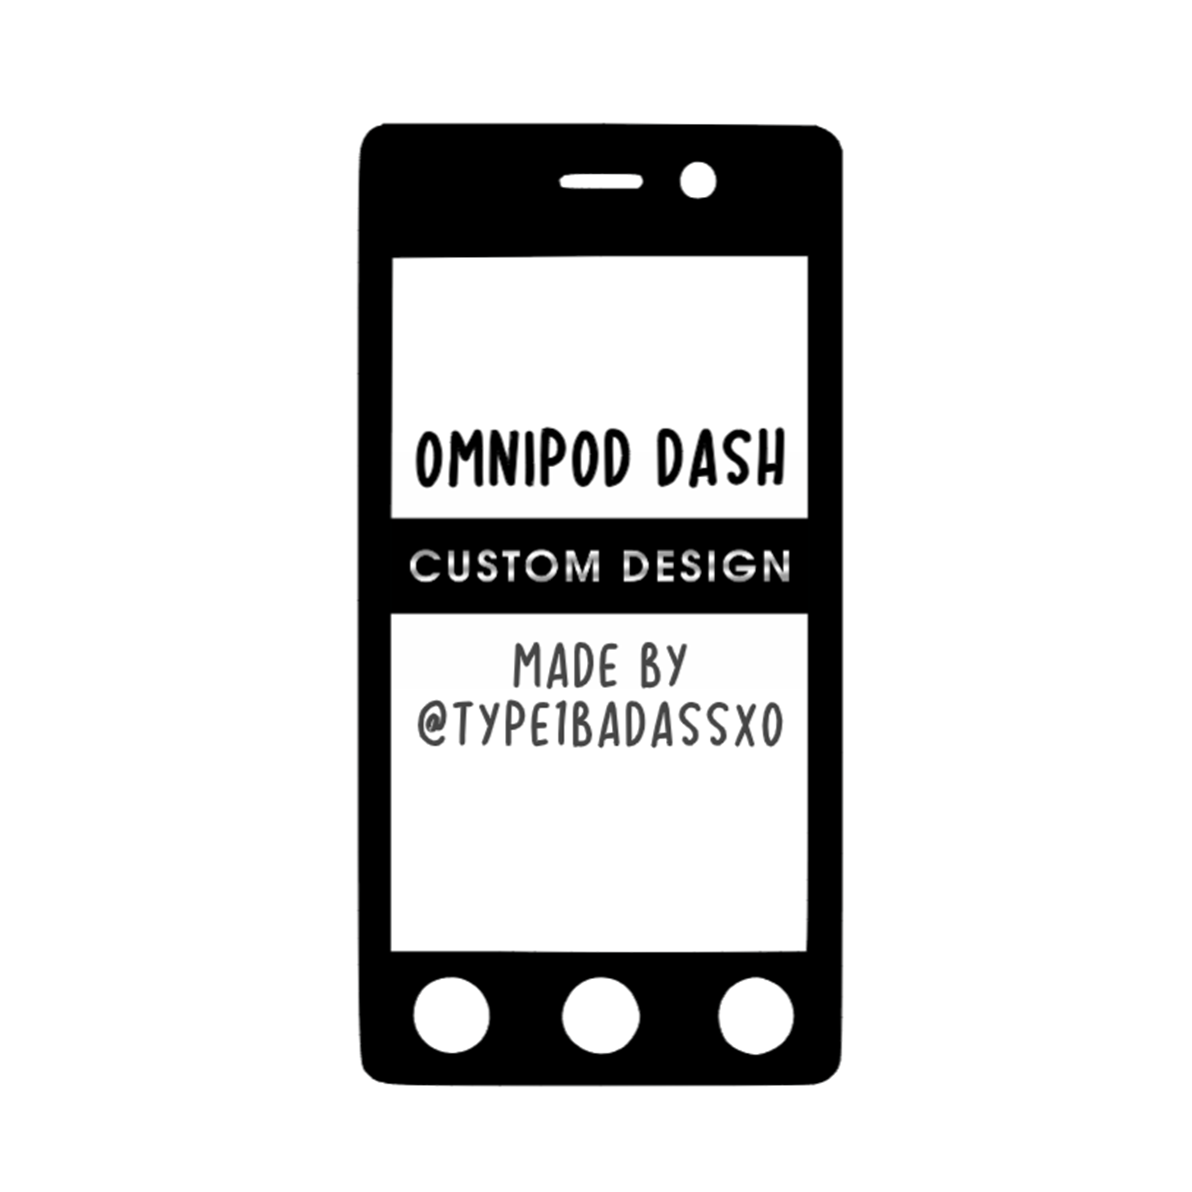 Custom Design - Omnipod DASH